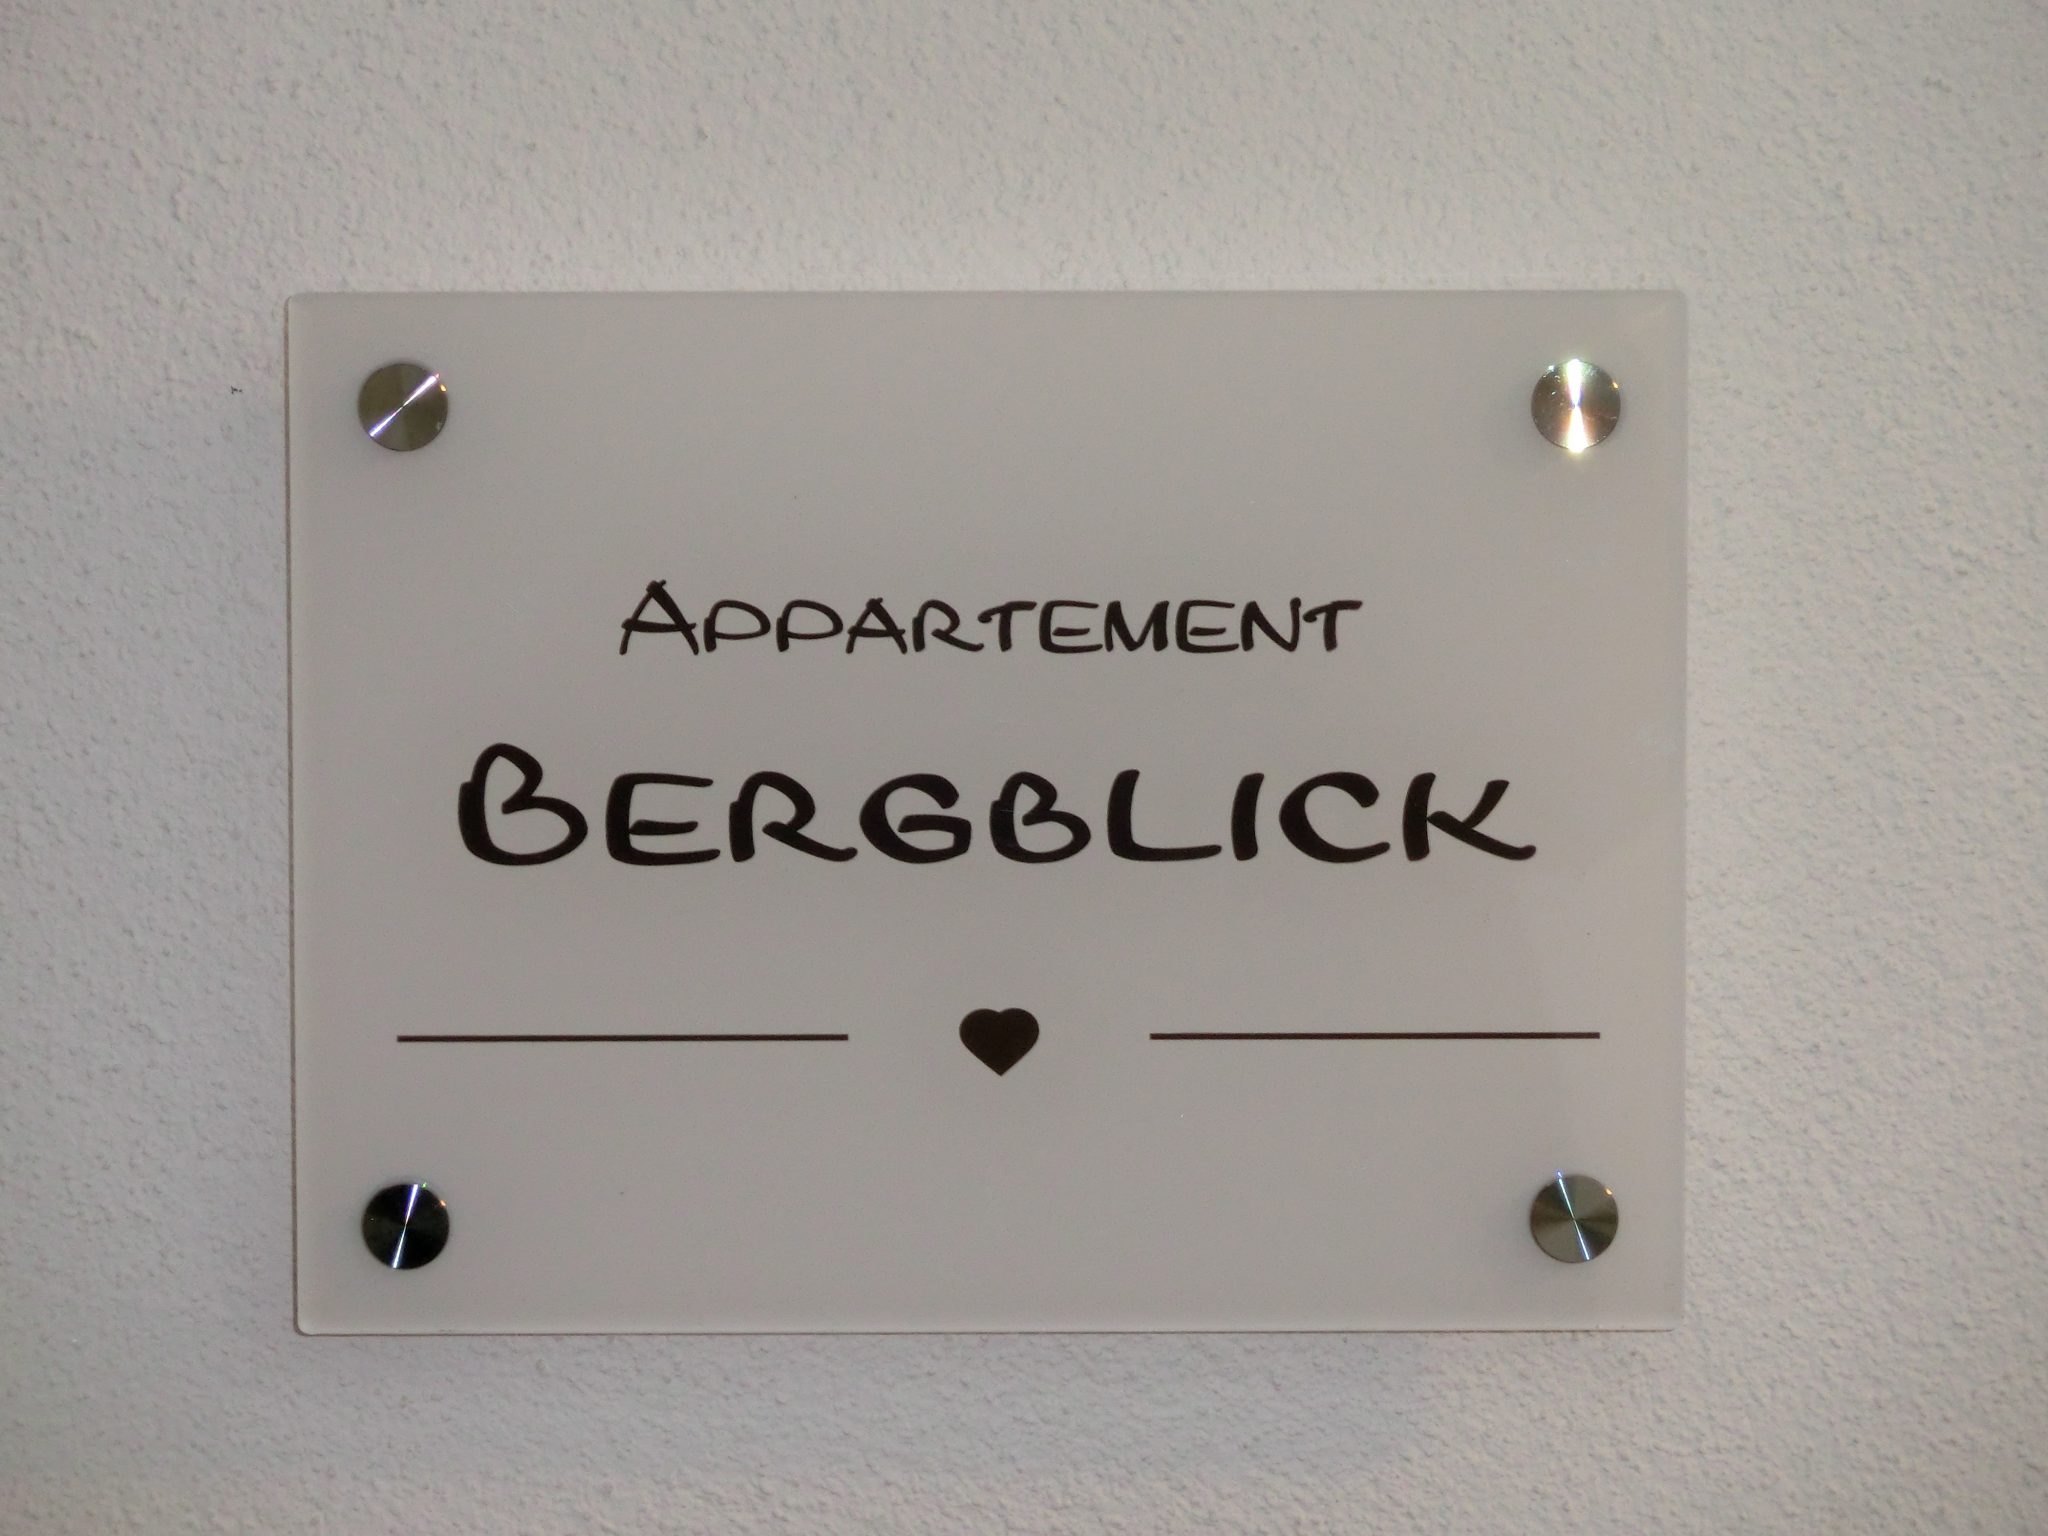 Appartement Bergblick - Ferienhof Dischler